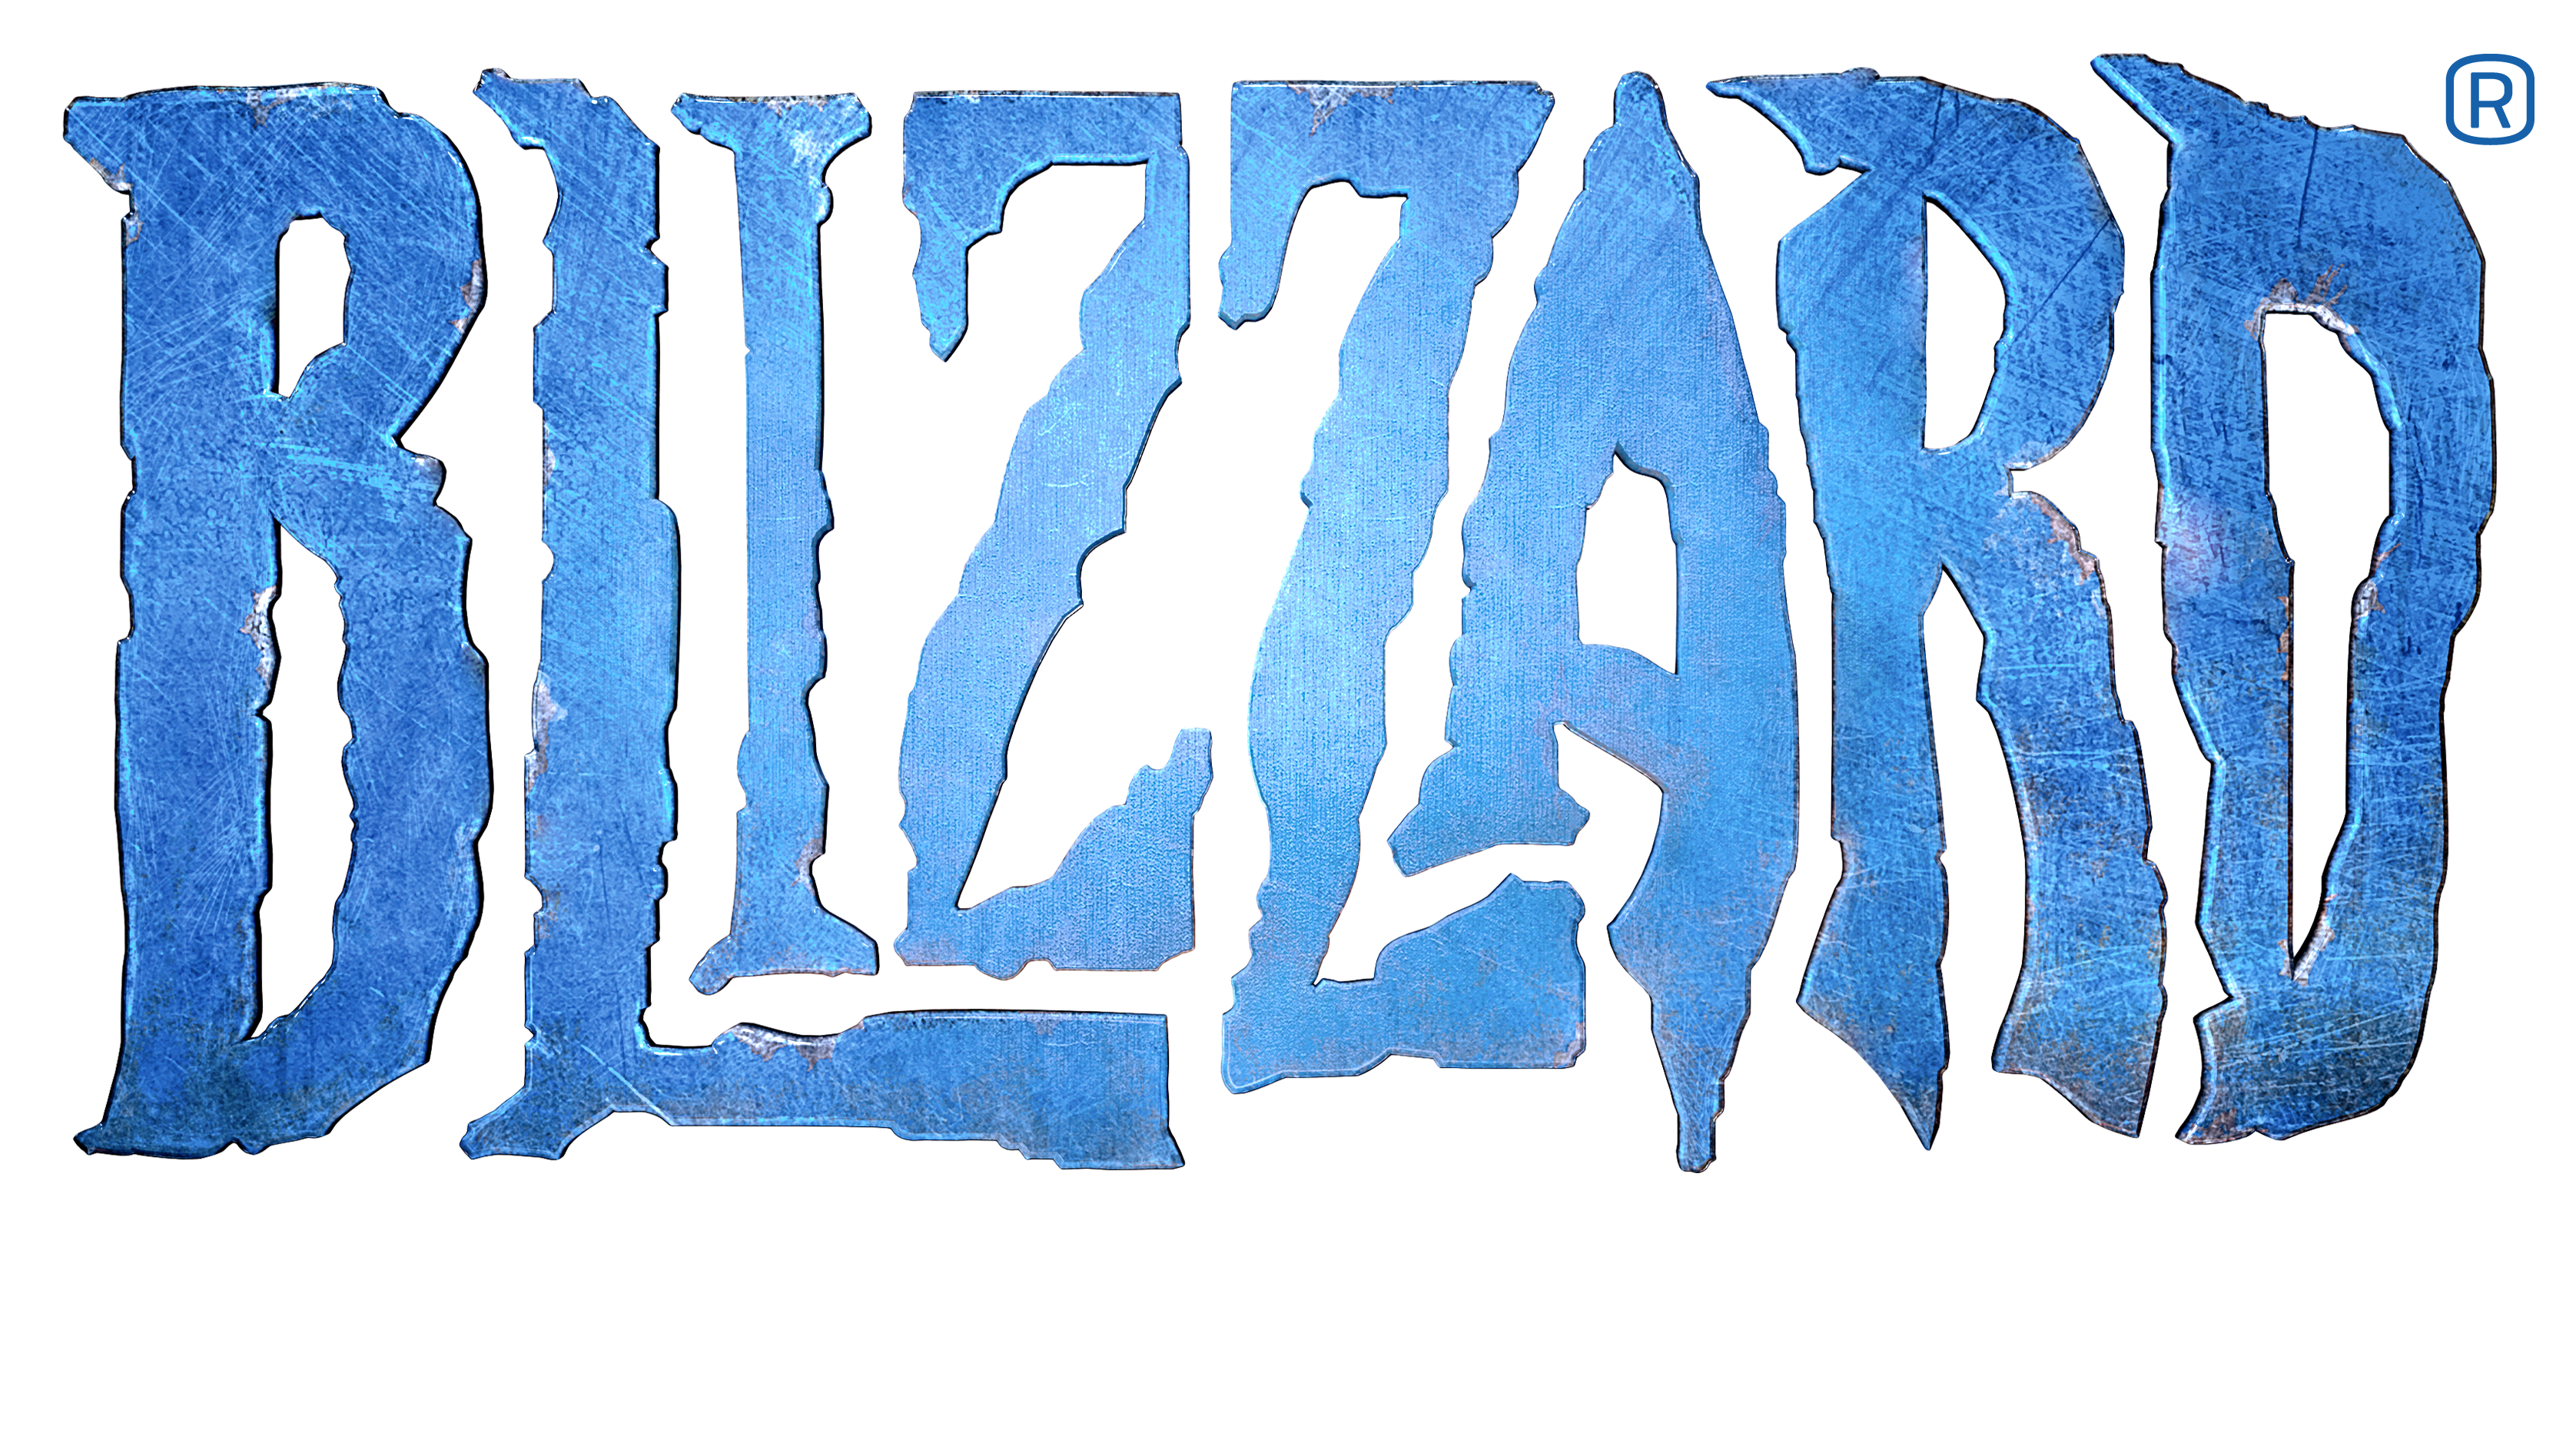 Blizzard Logos